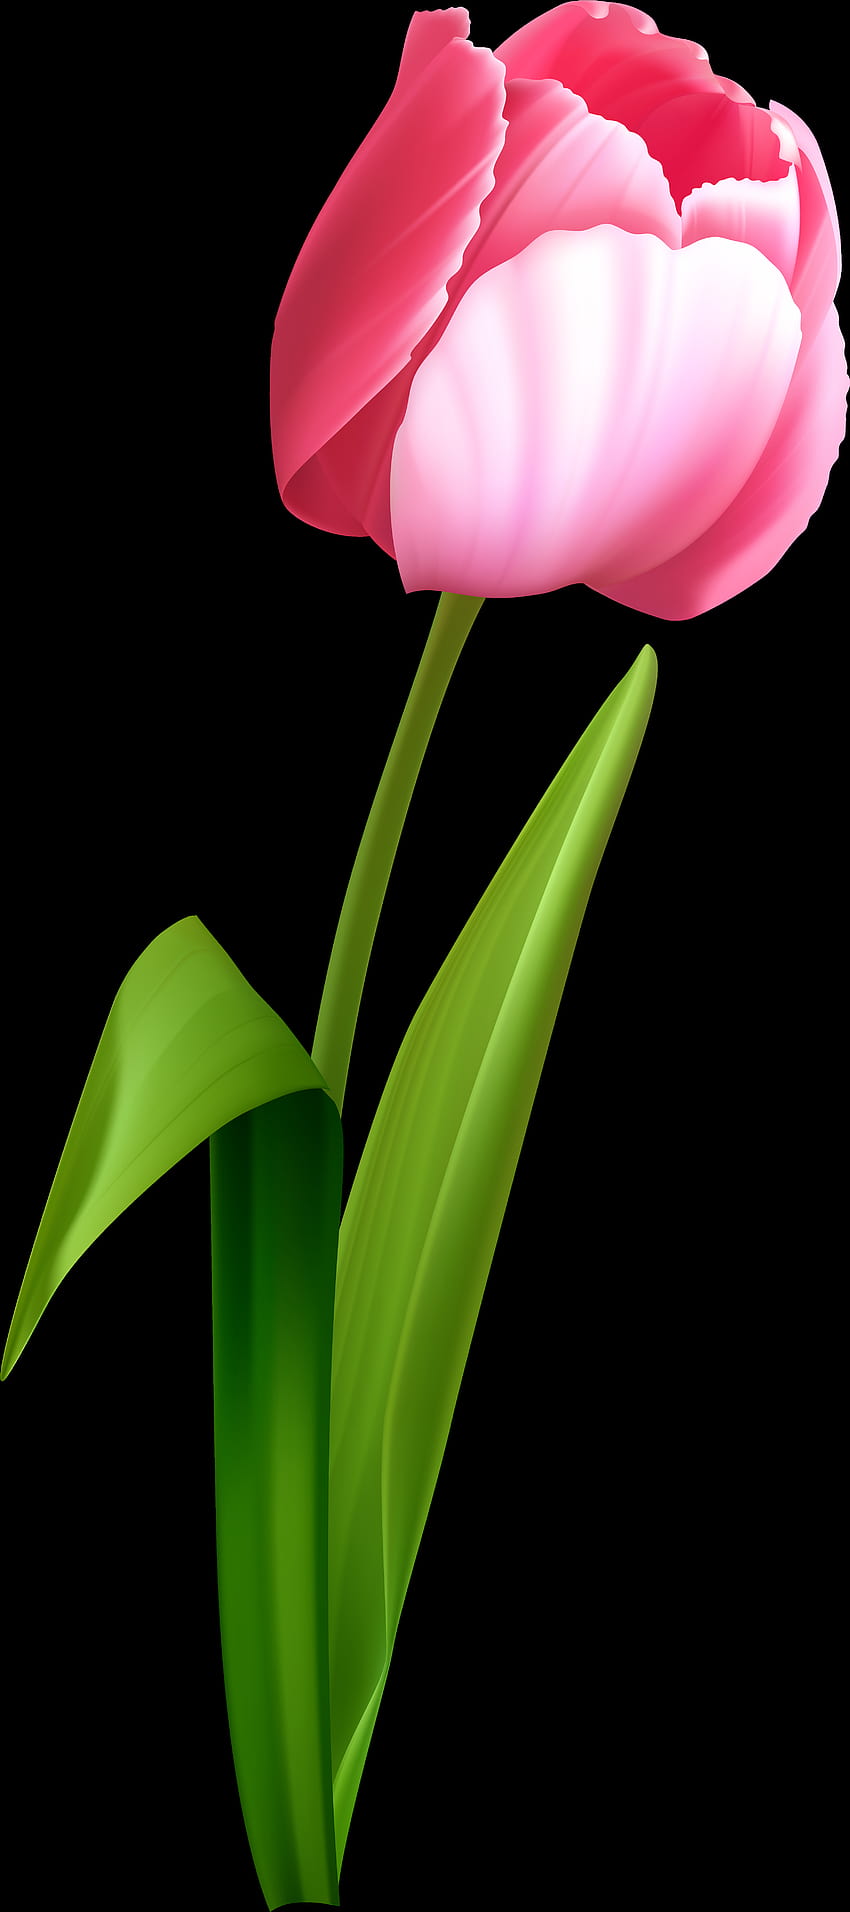 Tulip Portable Network Graphics Clip art Transparency, spring tulip art HD phone wallpaper